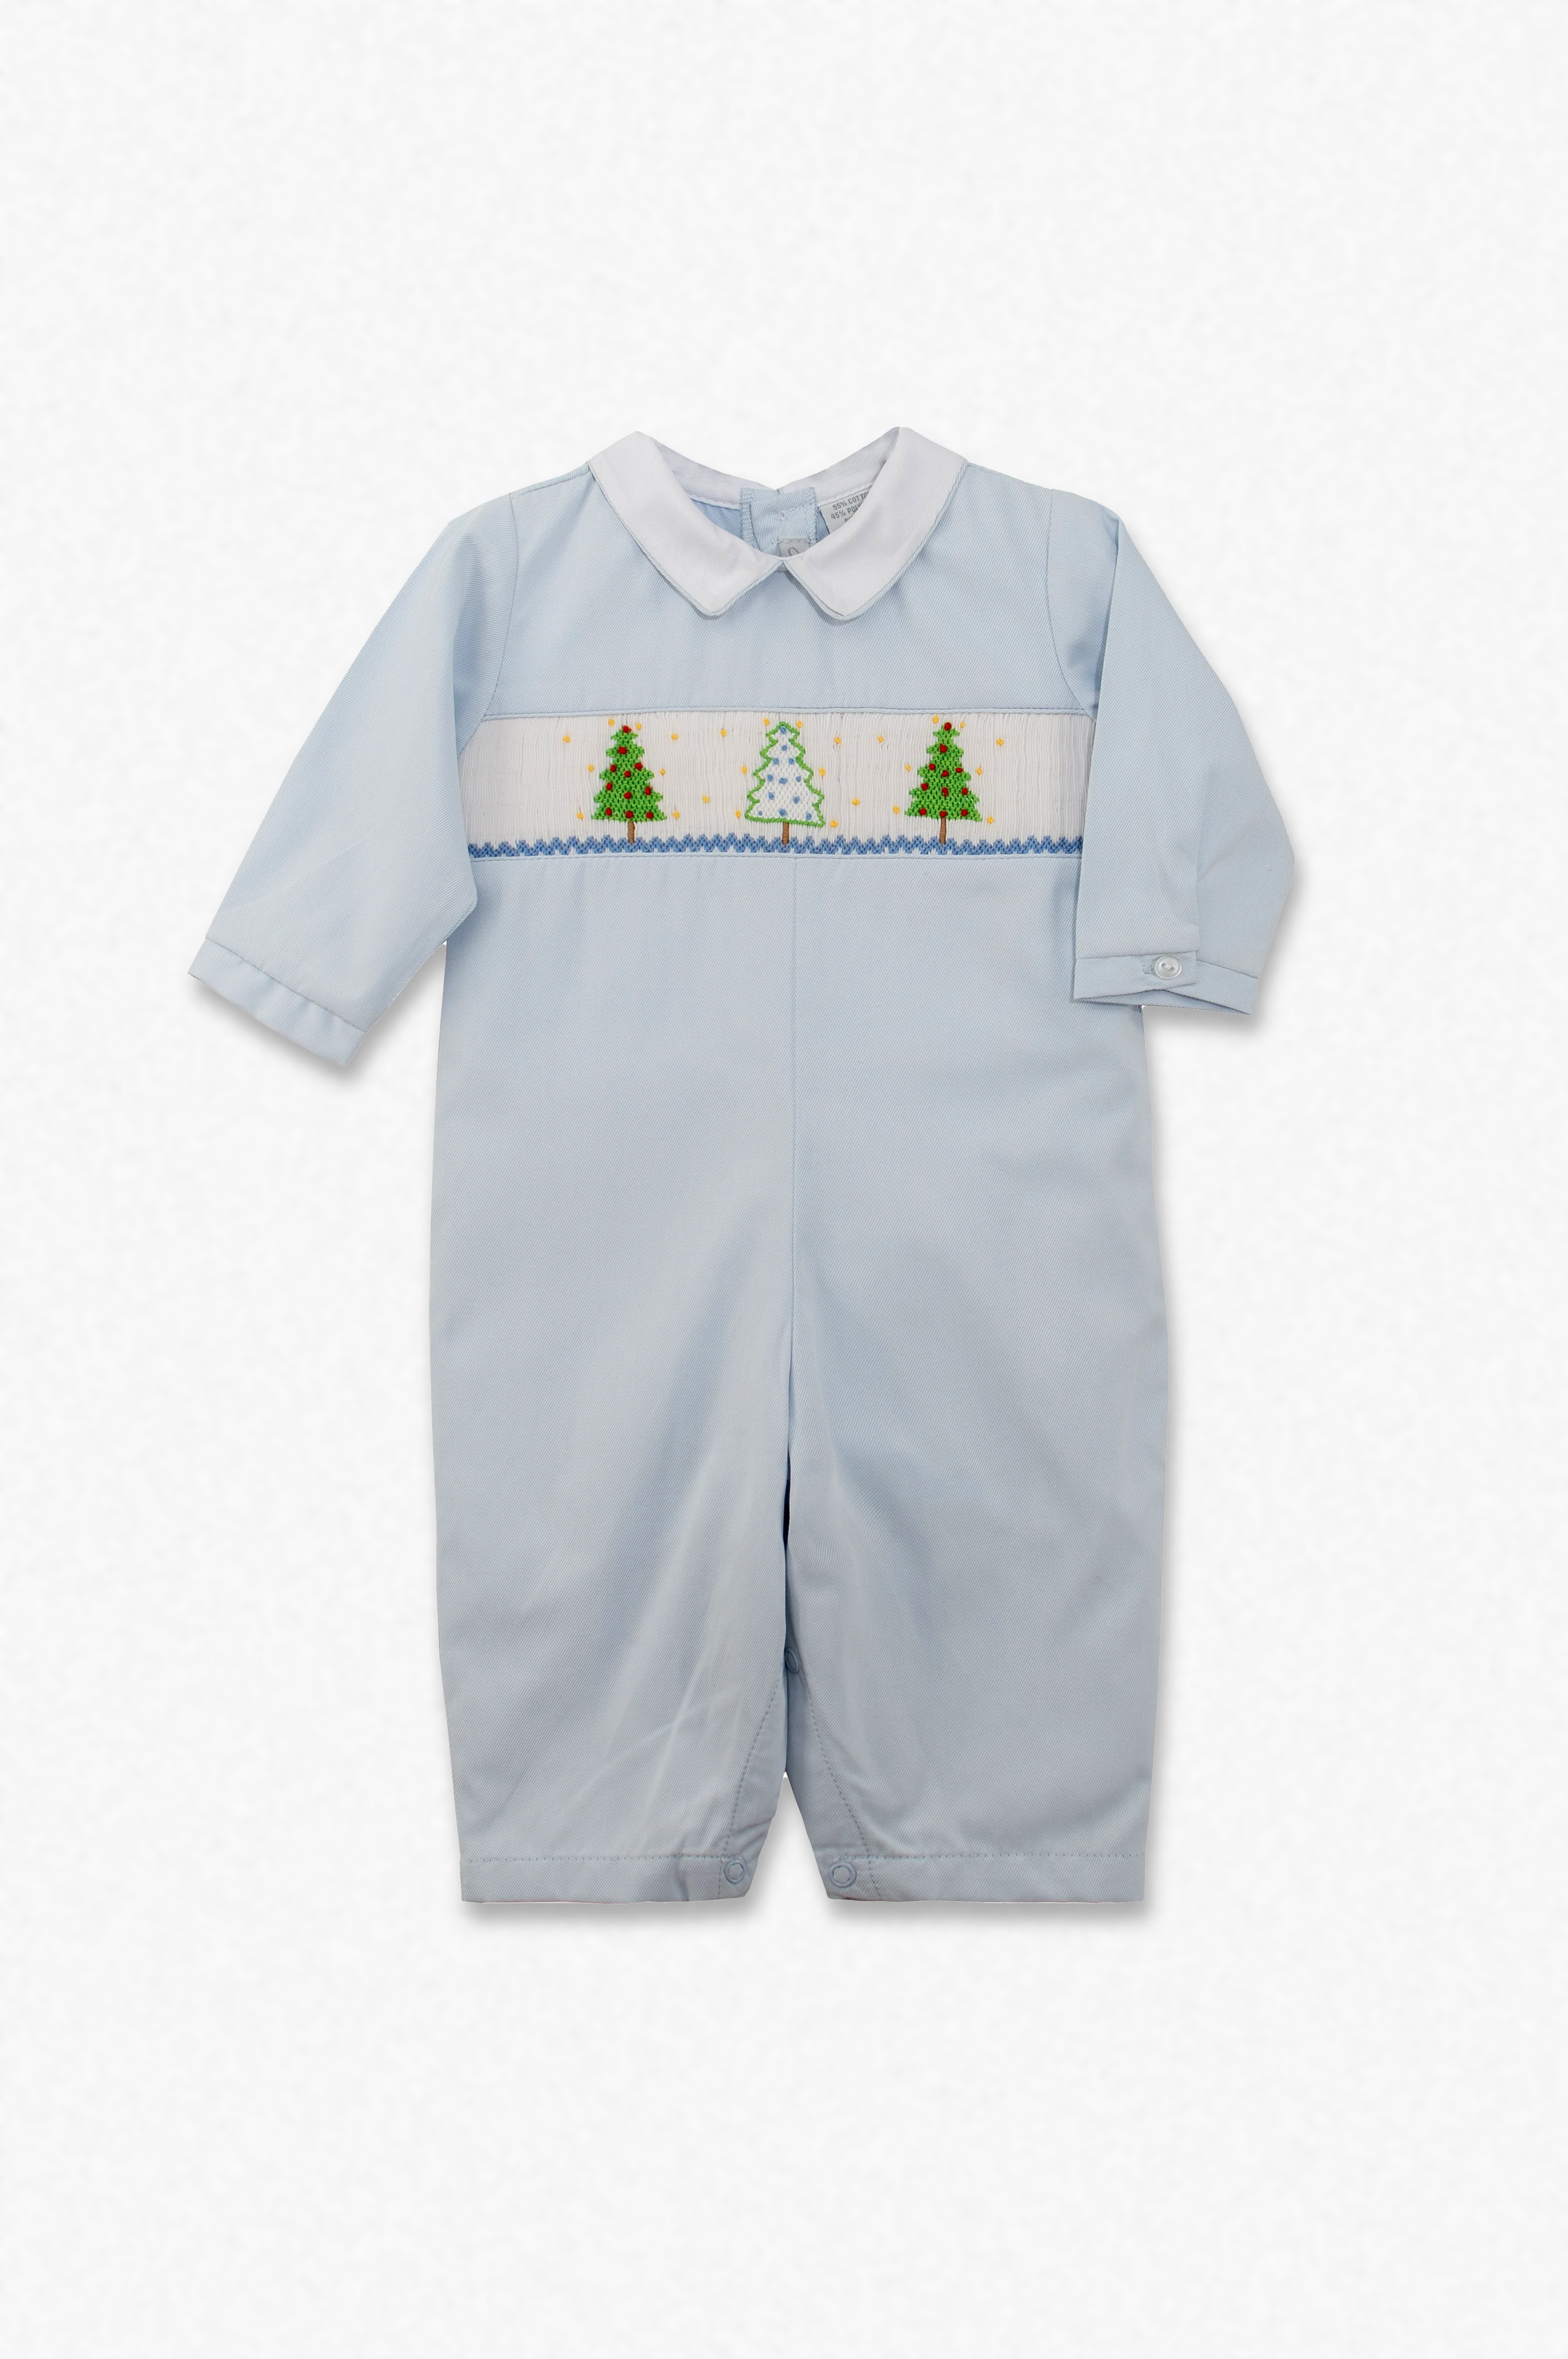 20241-Smocked Christmas Tree Baby Boy Longall